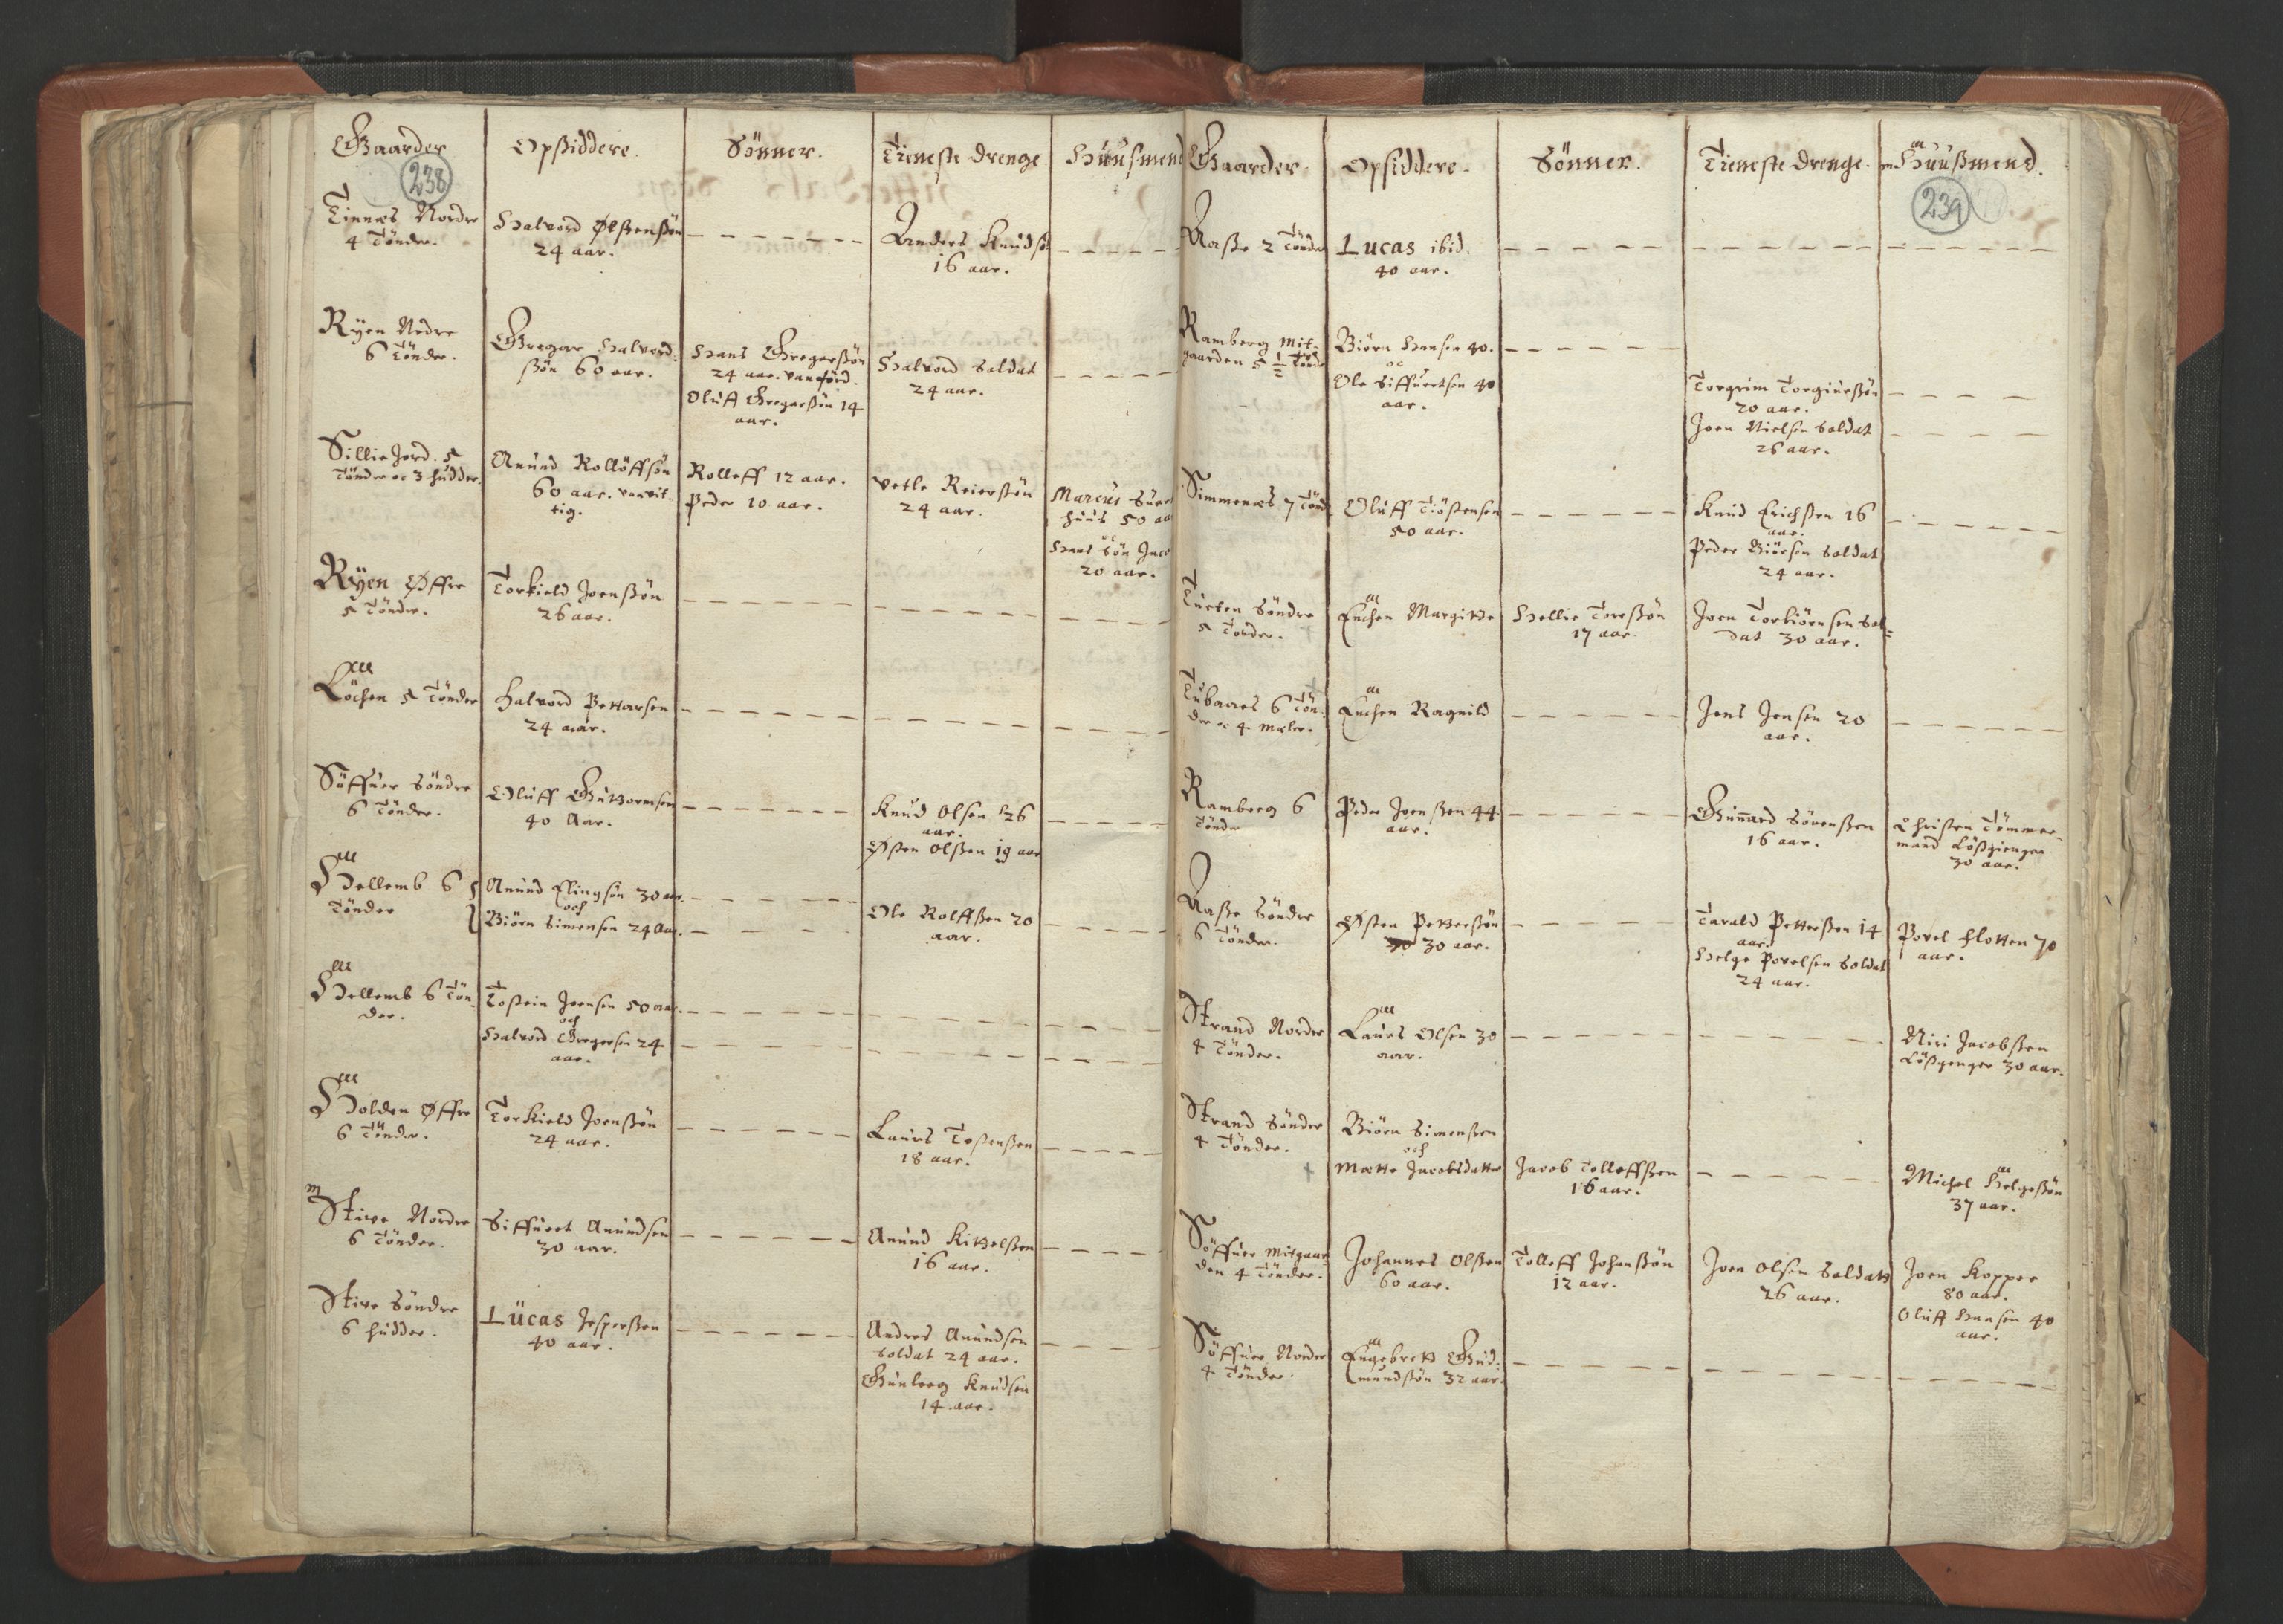 RA, Vicar's Census 1664-1666, no. 12: Øvre Telemark deanery, Nedre Telemark deanery and Bamble deanery, 1664-1666, p. 238-239